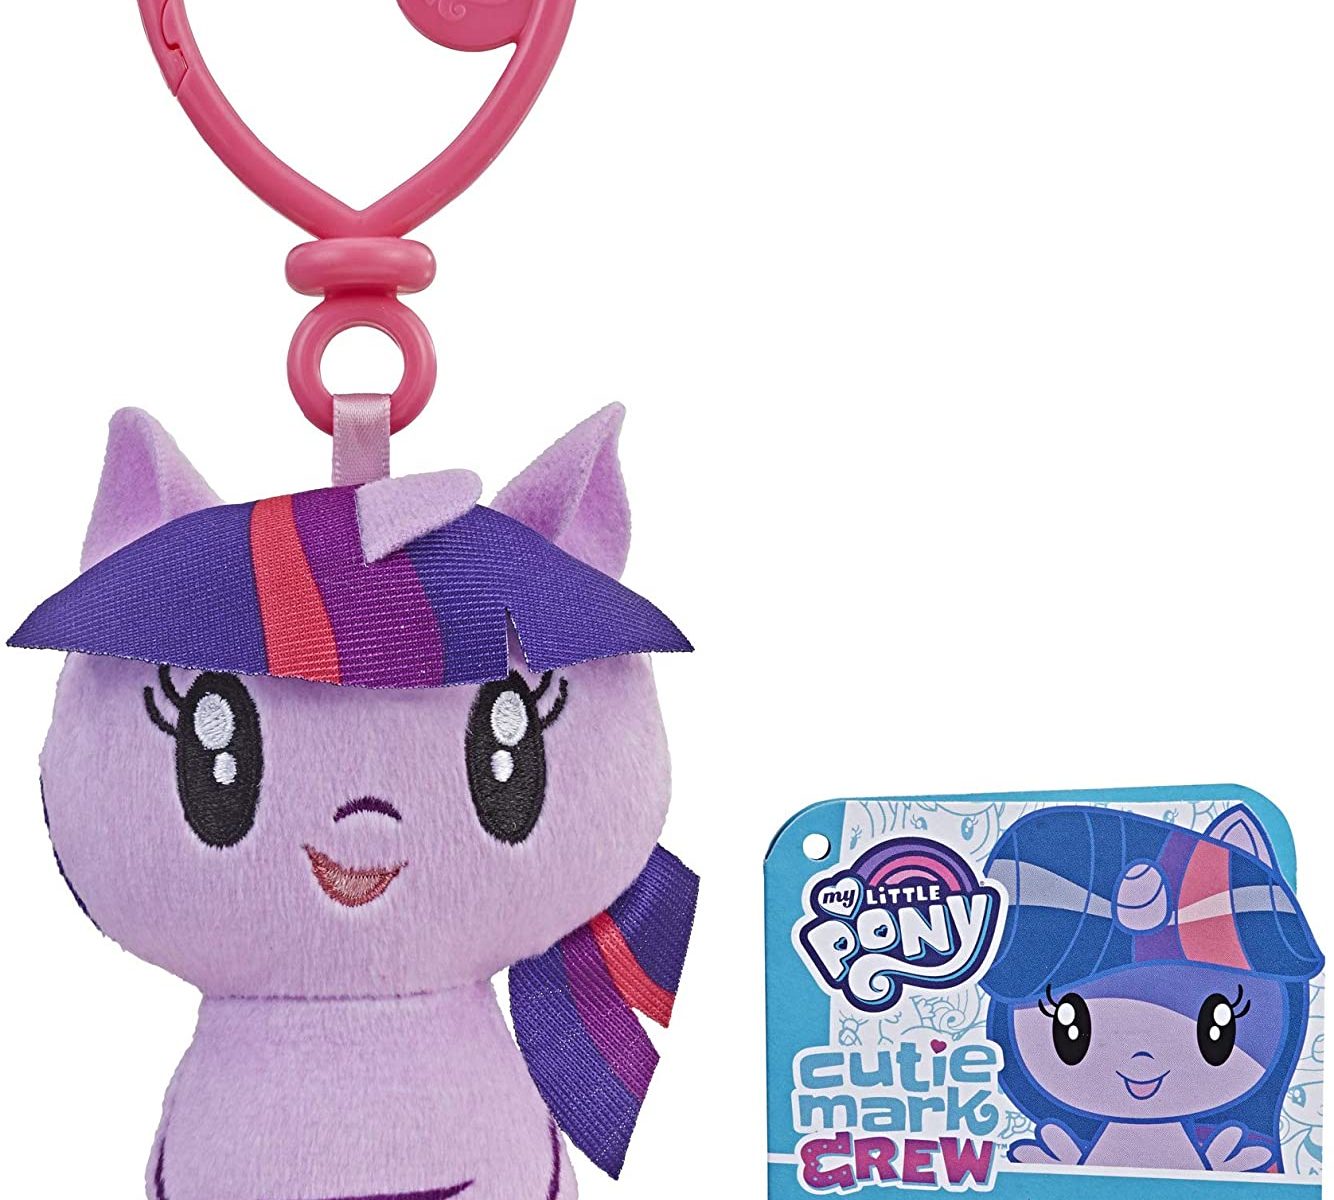 MLP Cutie Mark Crew Twilight Sparkle Pony Plush Clip 1